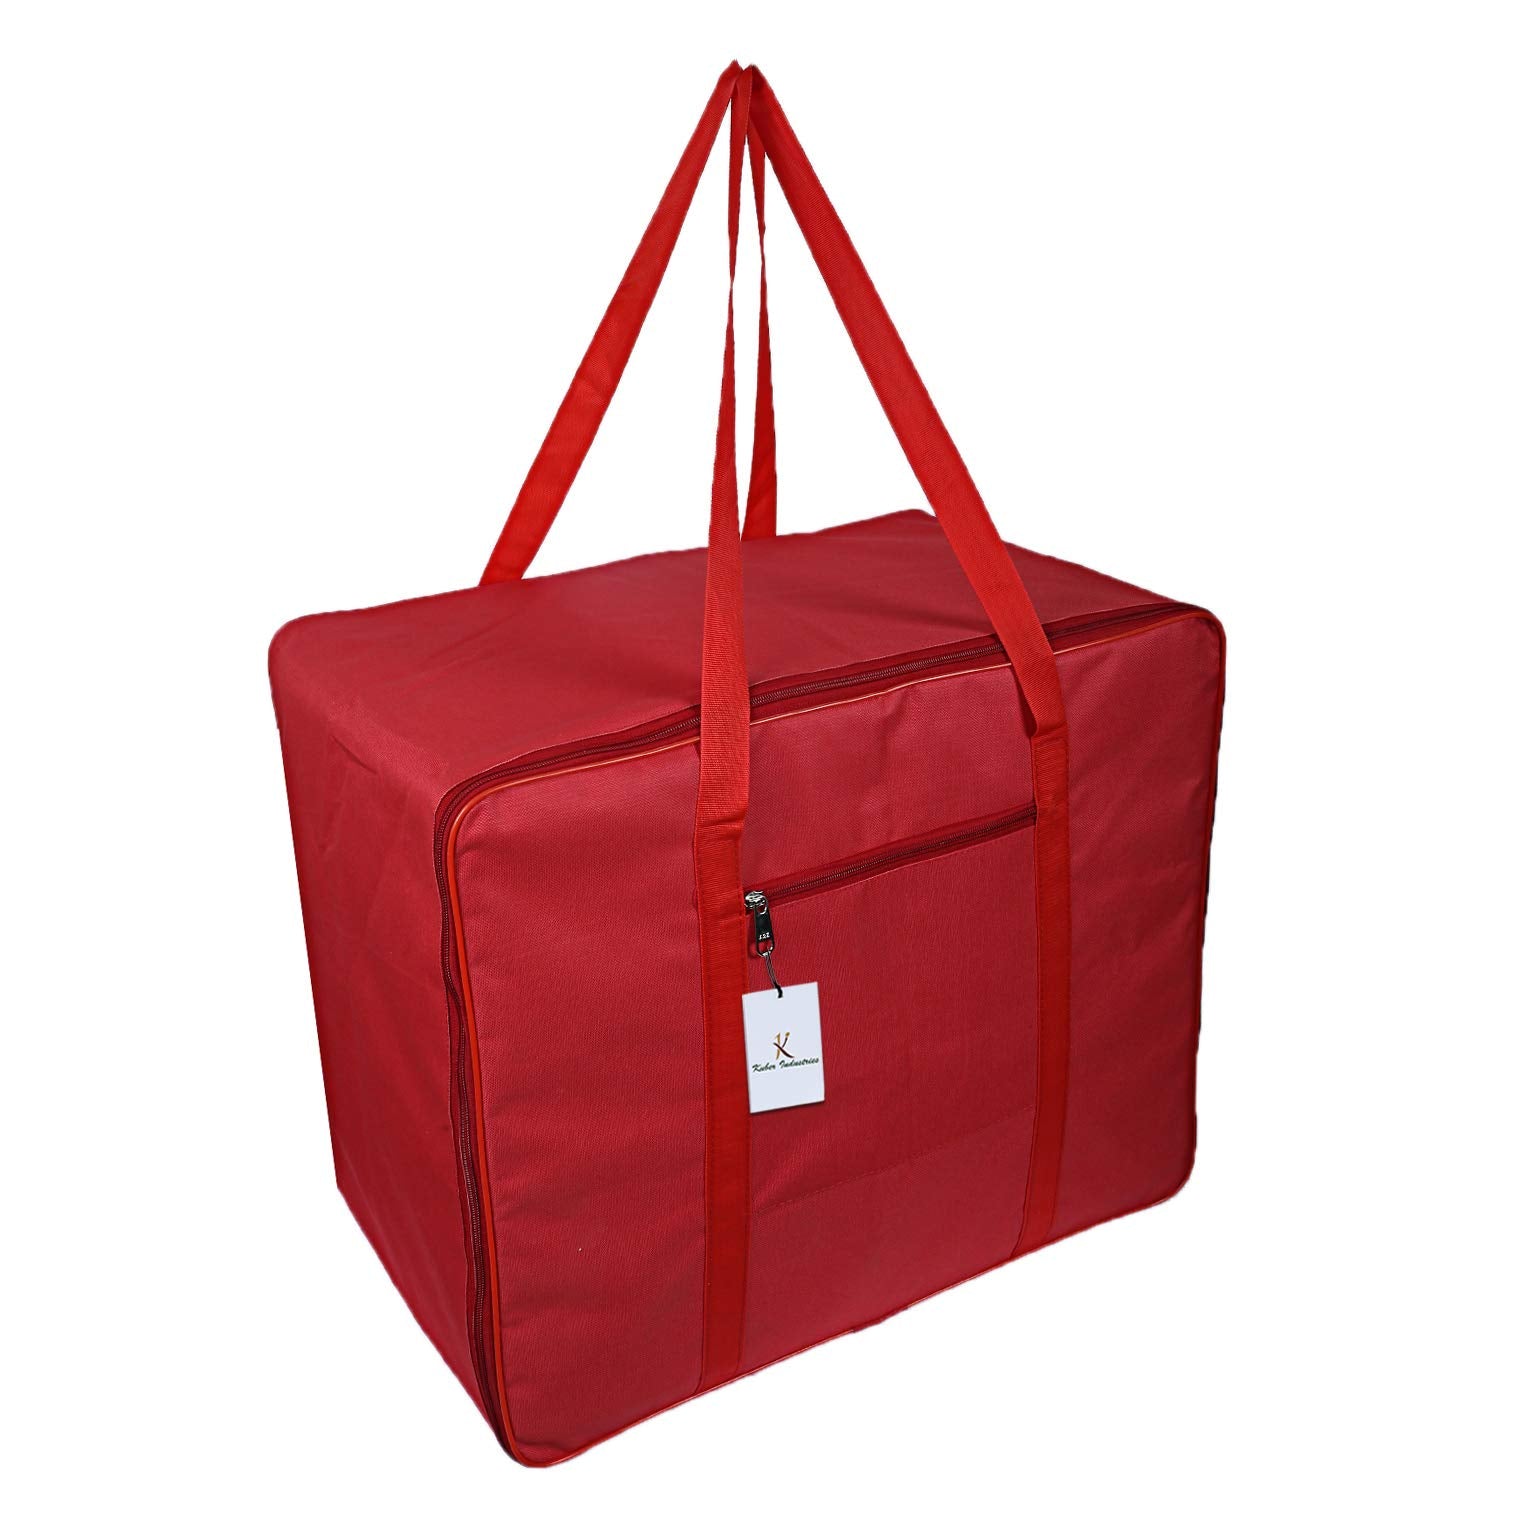 Kuber Industries Rexene Jumbo Moisture Proof Rectangular Underbed Storage Bag with Zipper Closure and Handle (Red)